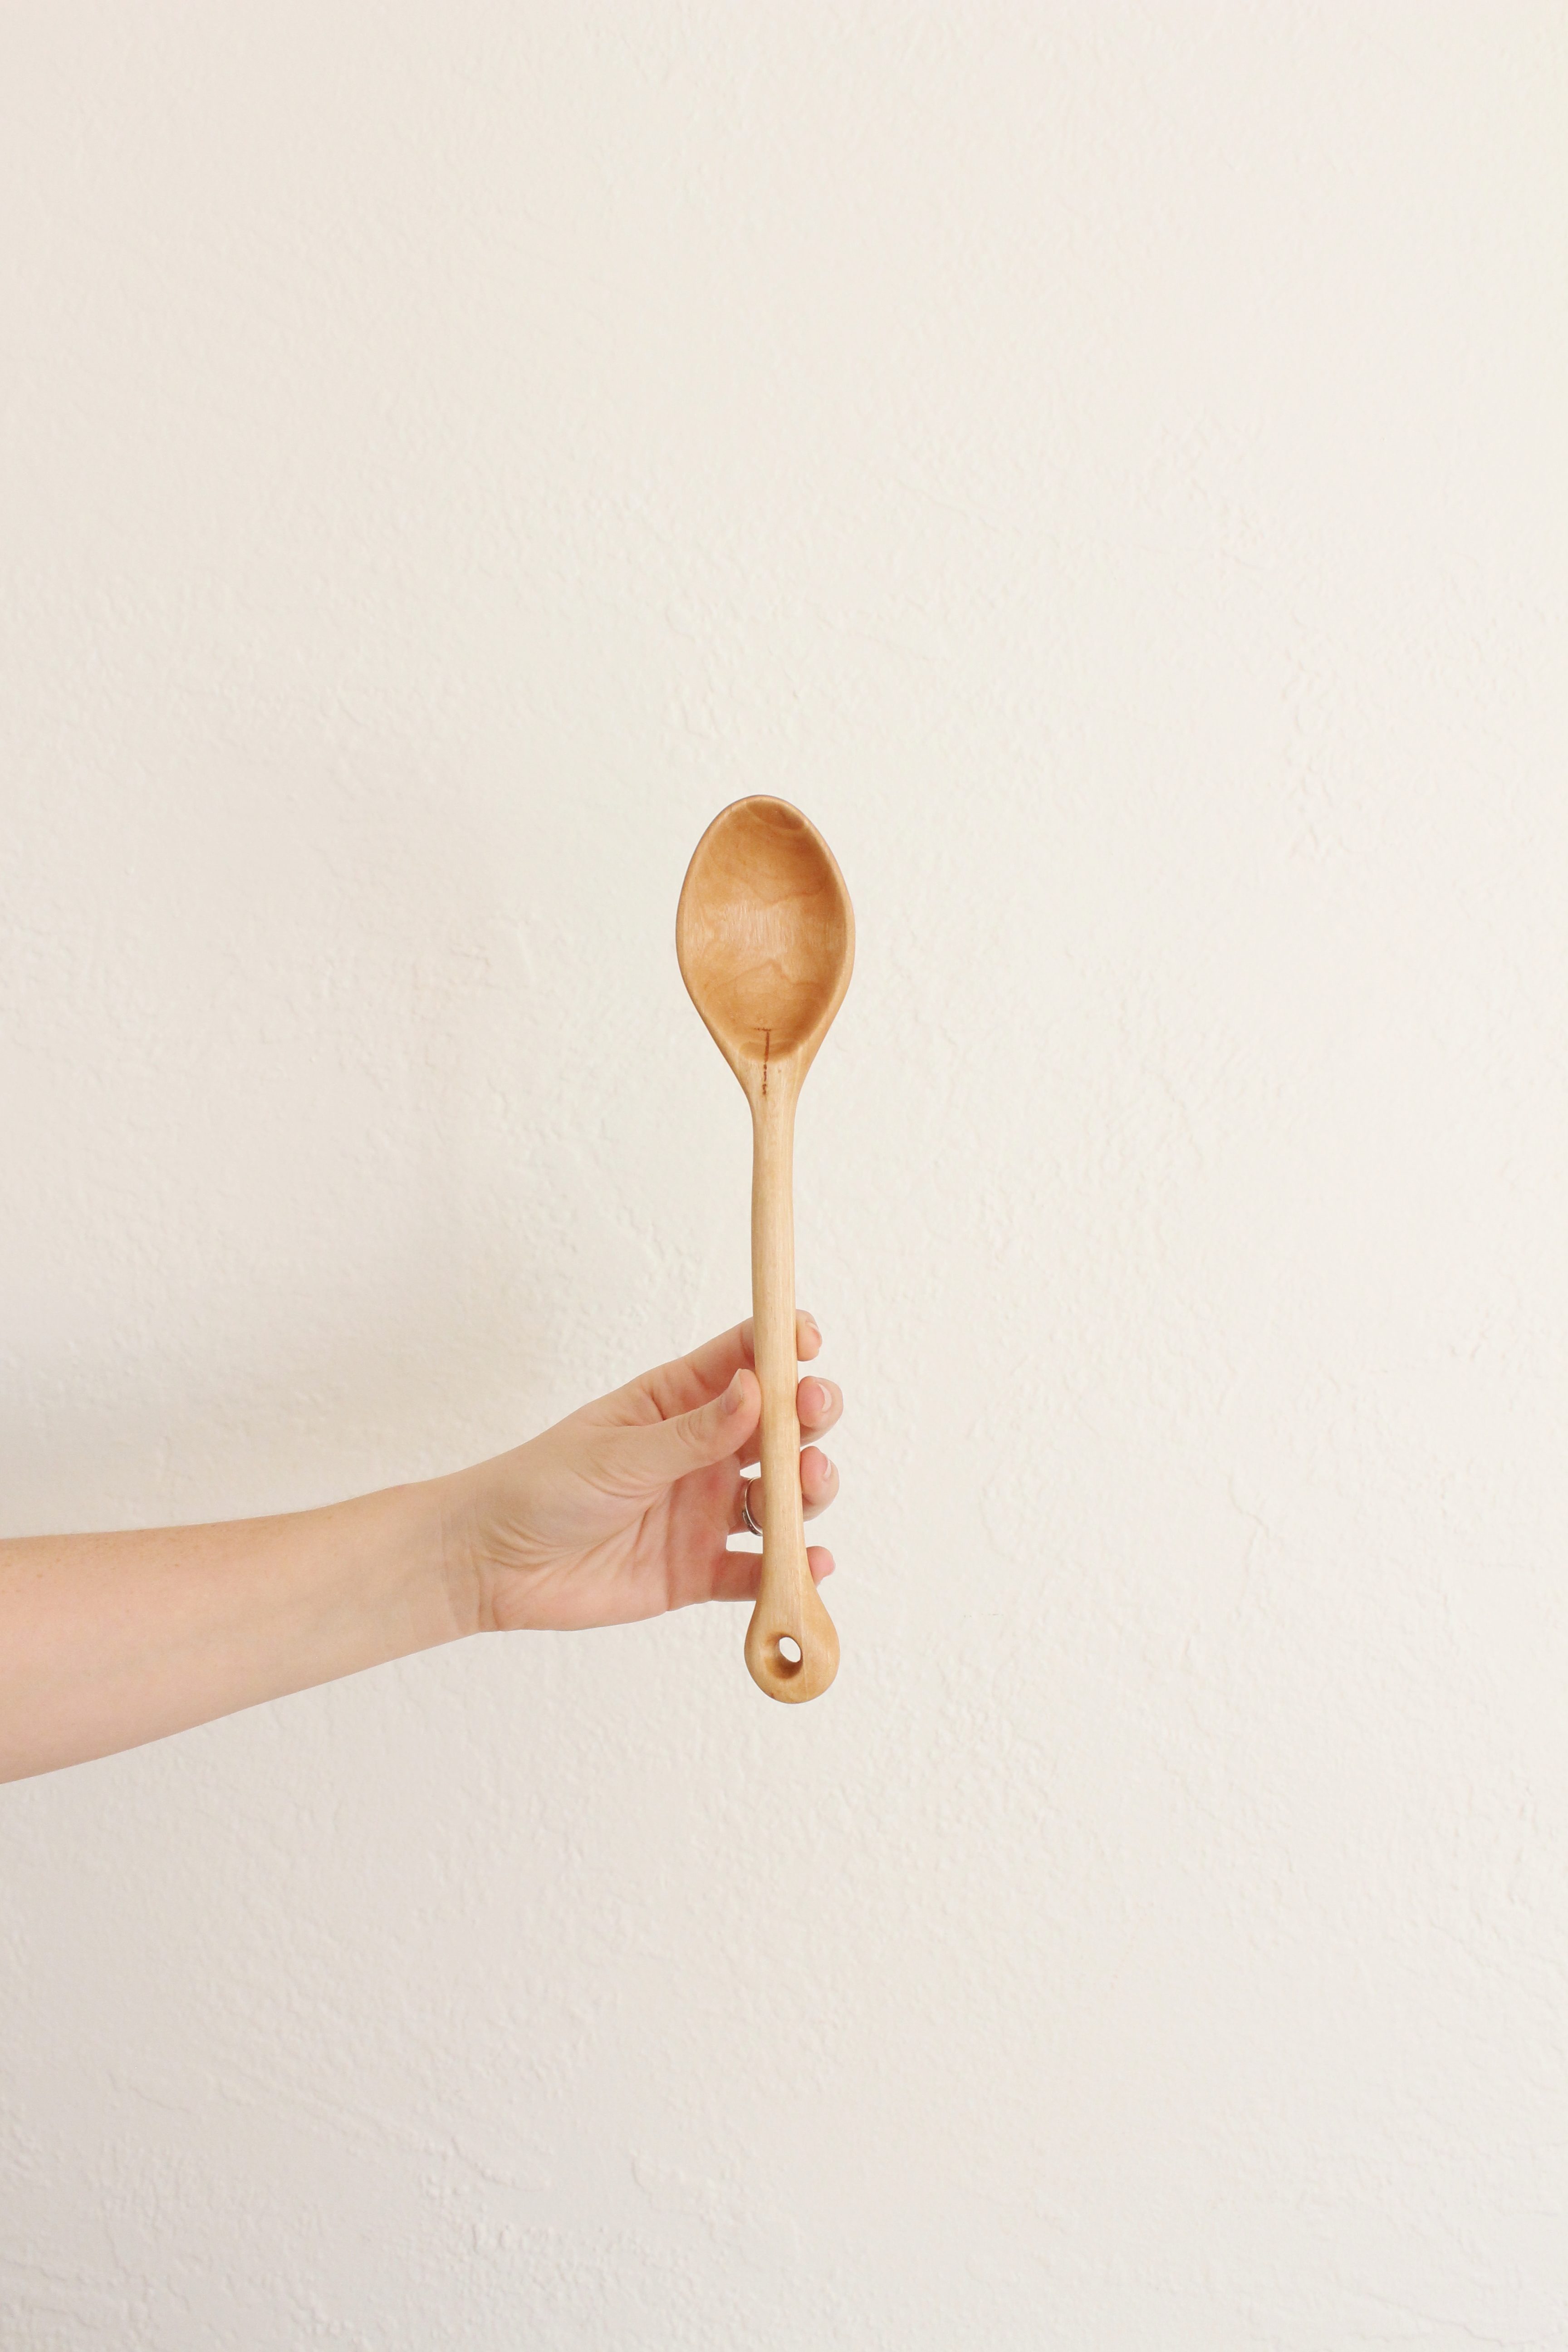 wood spoon carving